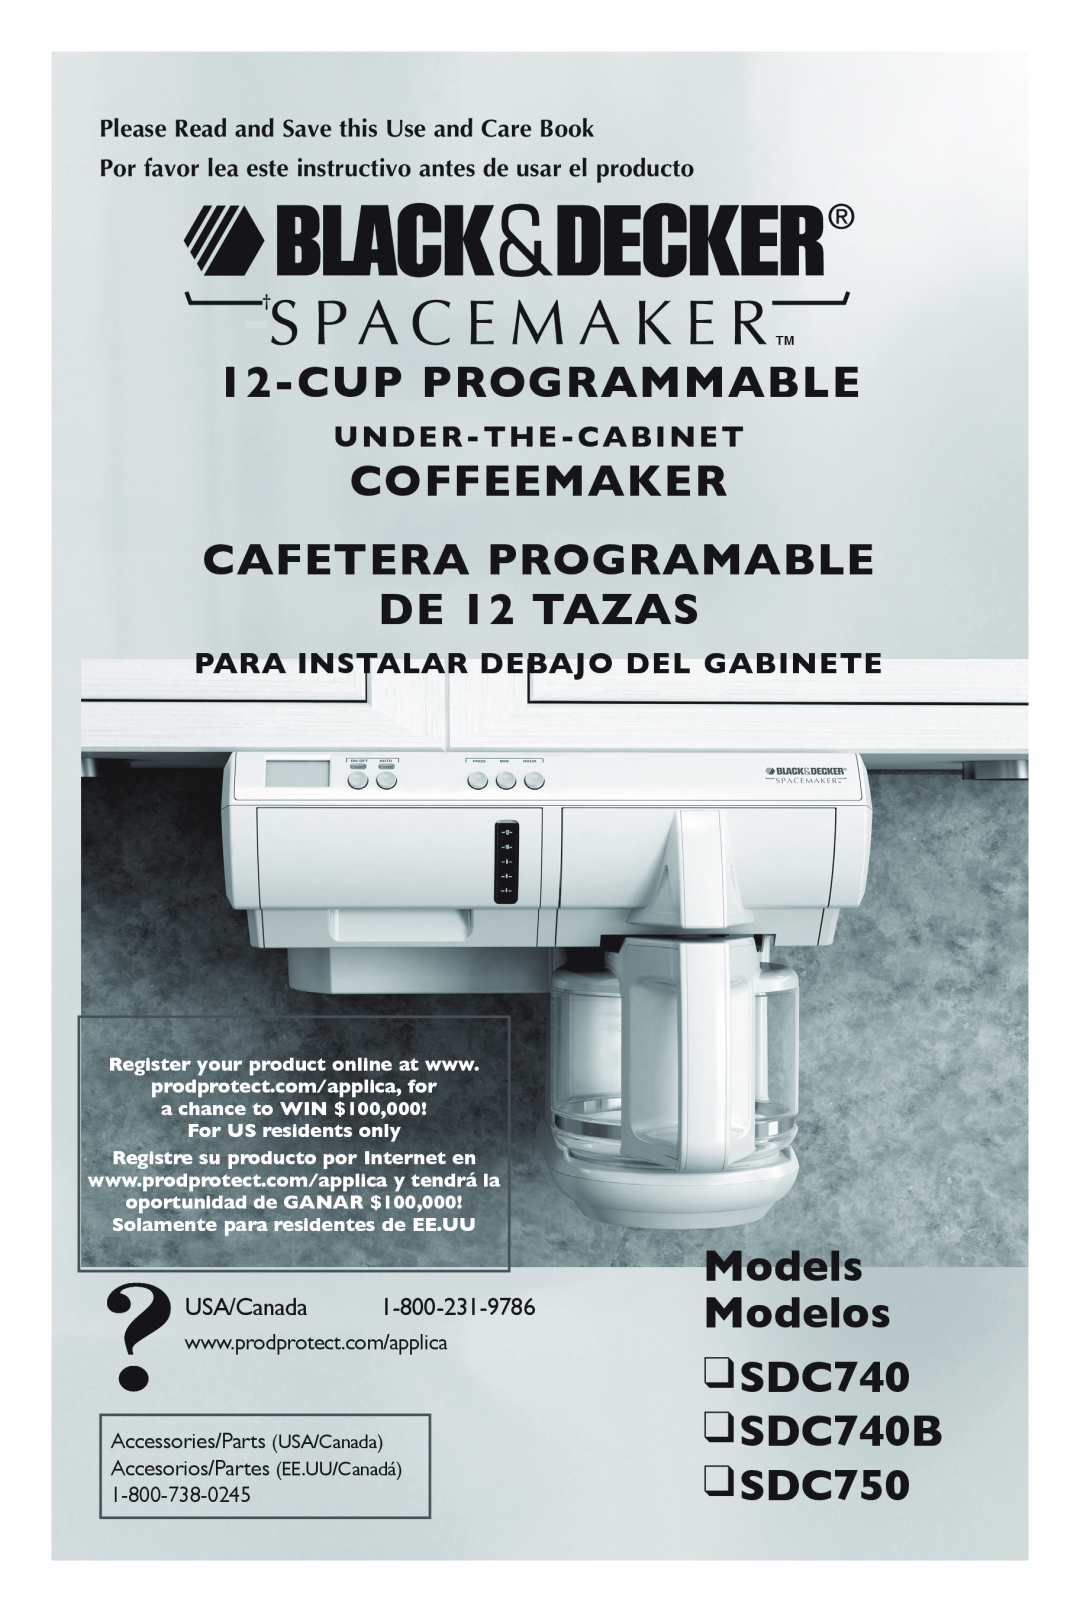 Black & Decker SDC750, SDC740 manual Cup Programmable, Coffeemaker Cafetera programable de 12 tazas, Under-The-Cabinet 